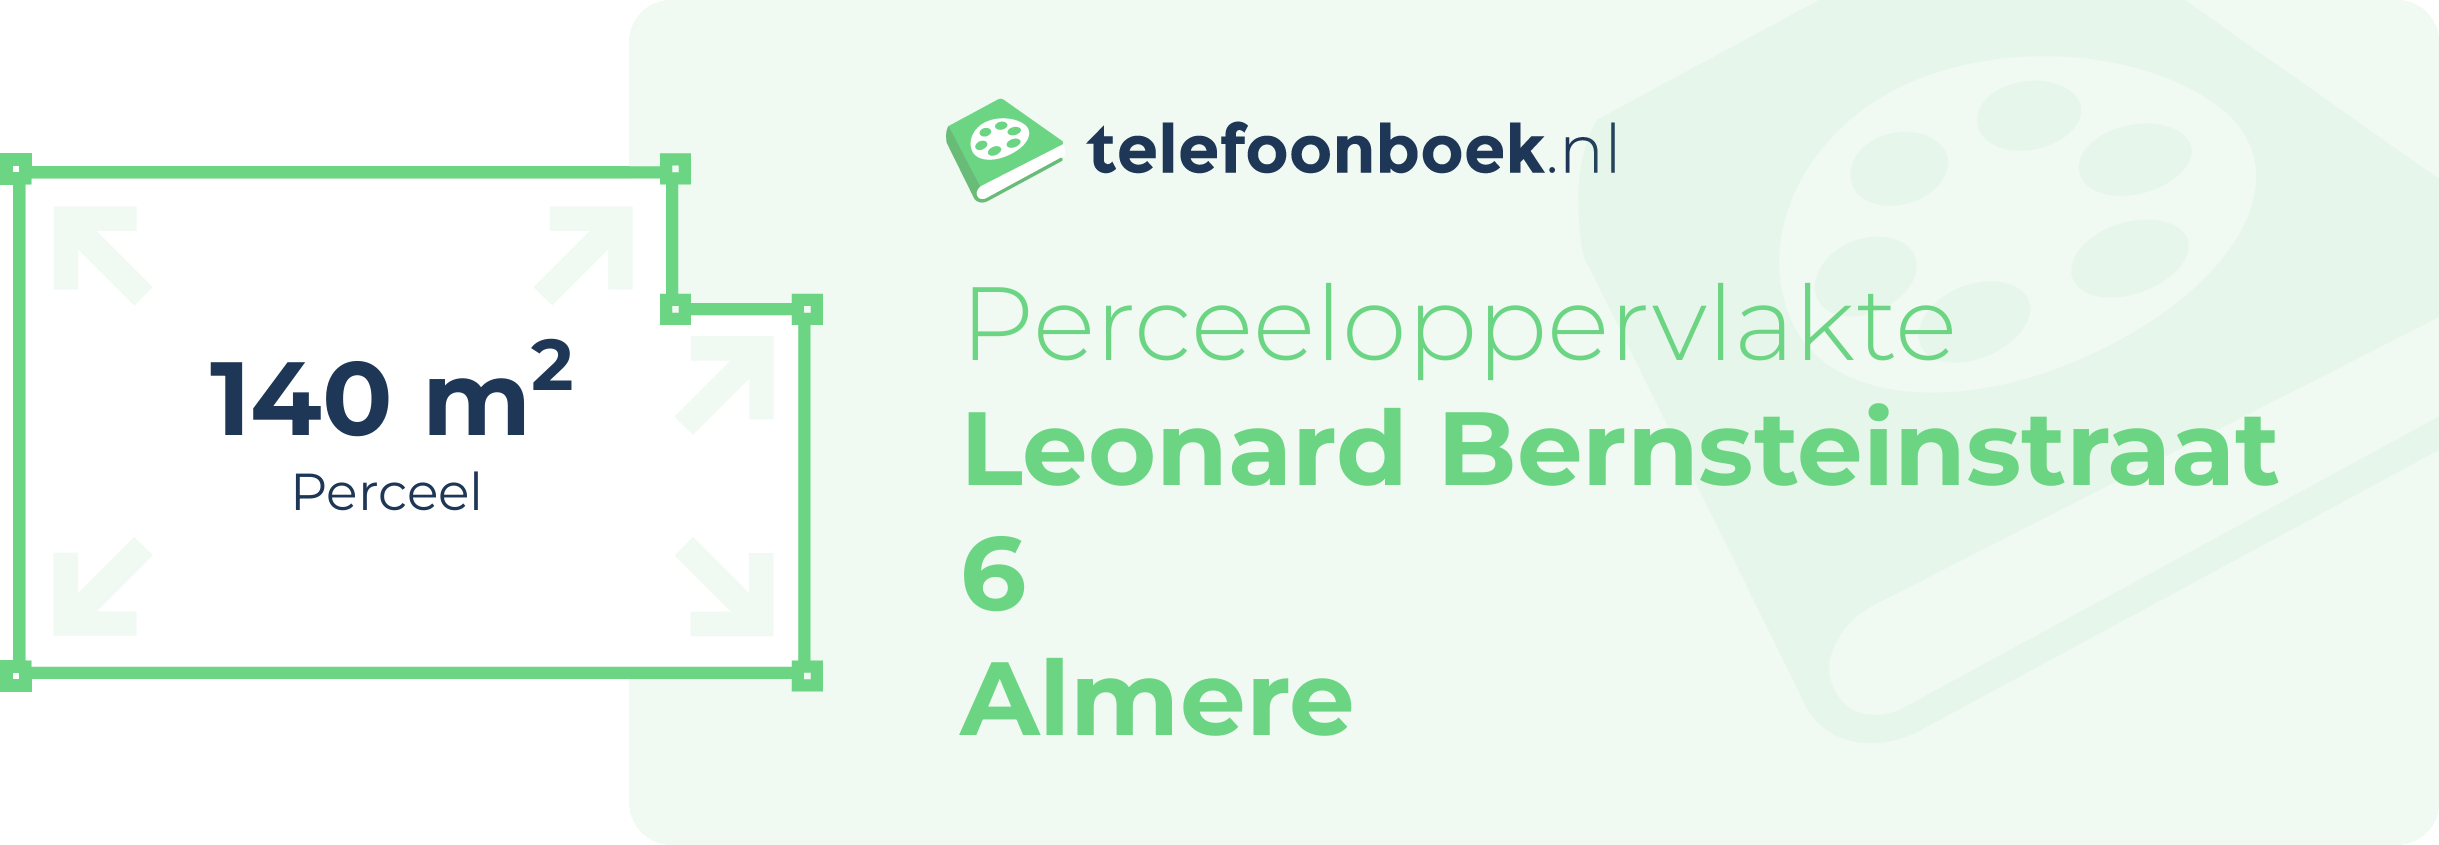 Perceeloppervlakte Leonard Bernsteinstraat 6 Almere